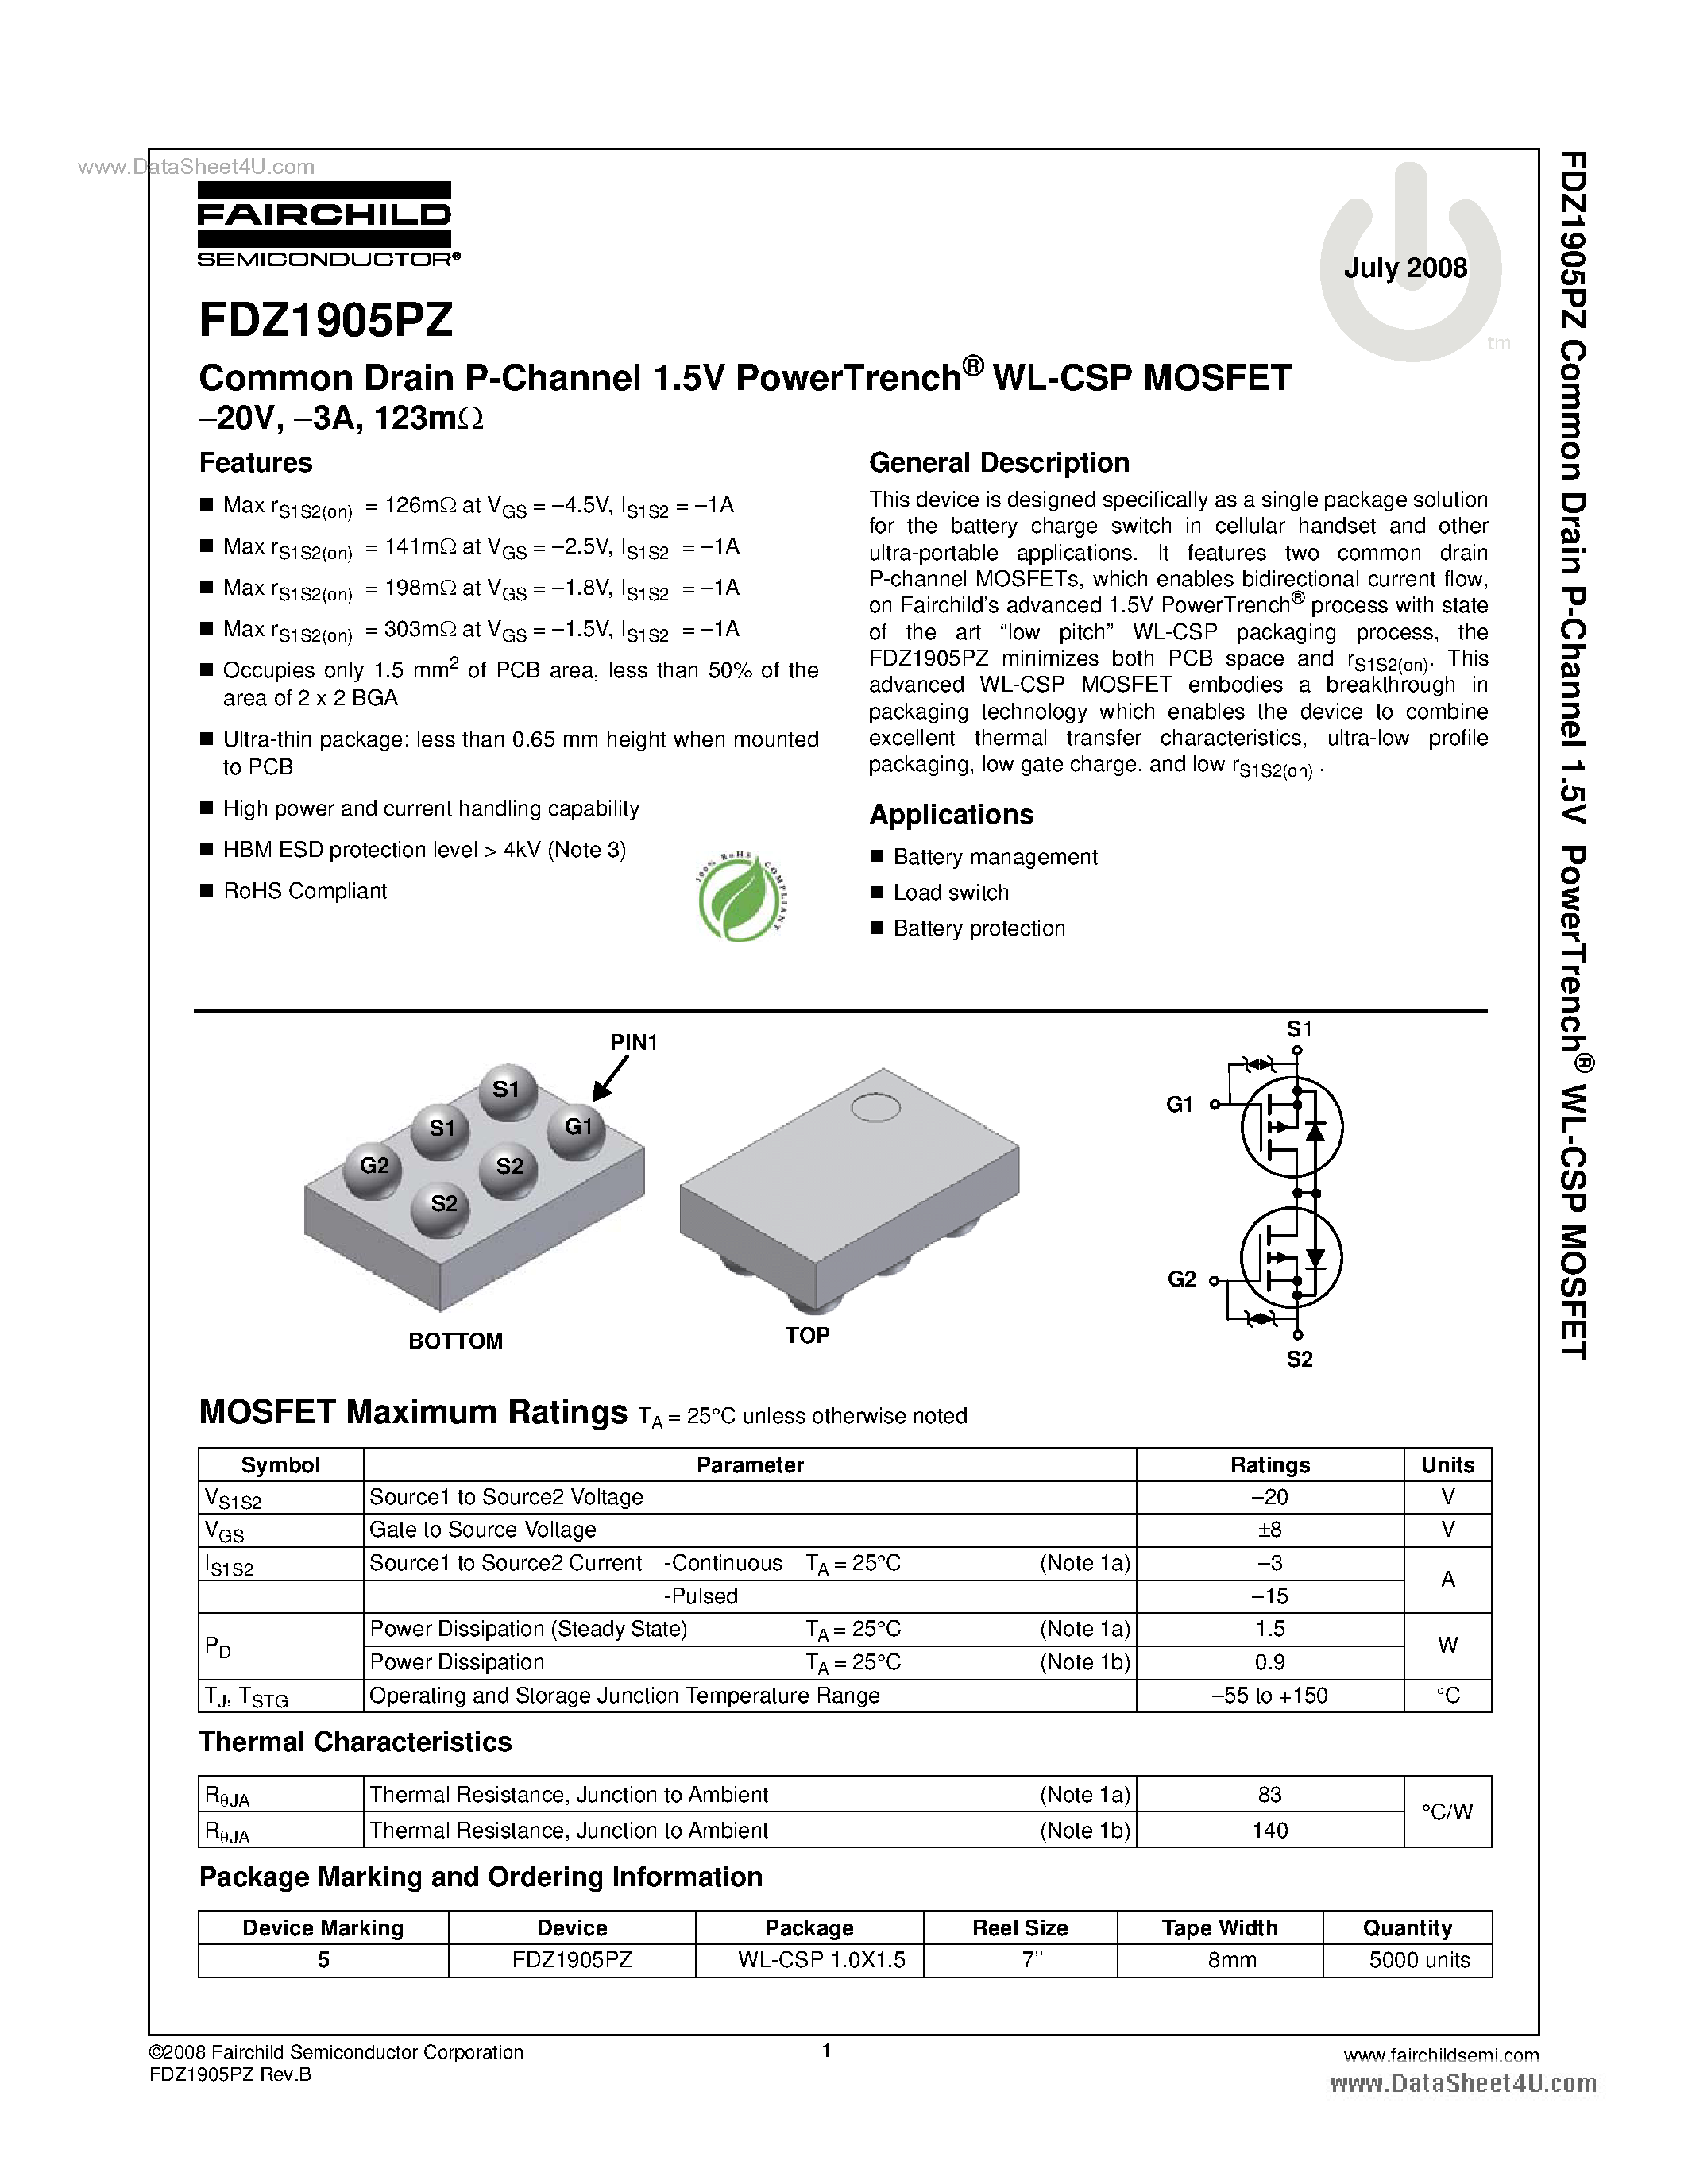 Даташит FDZ1905PZ - Common Drain P-Channel 1.5V PowerTrench WL-CSP MOSFET страница 1